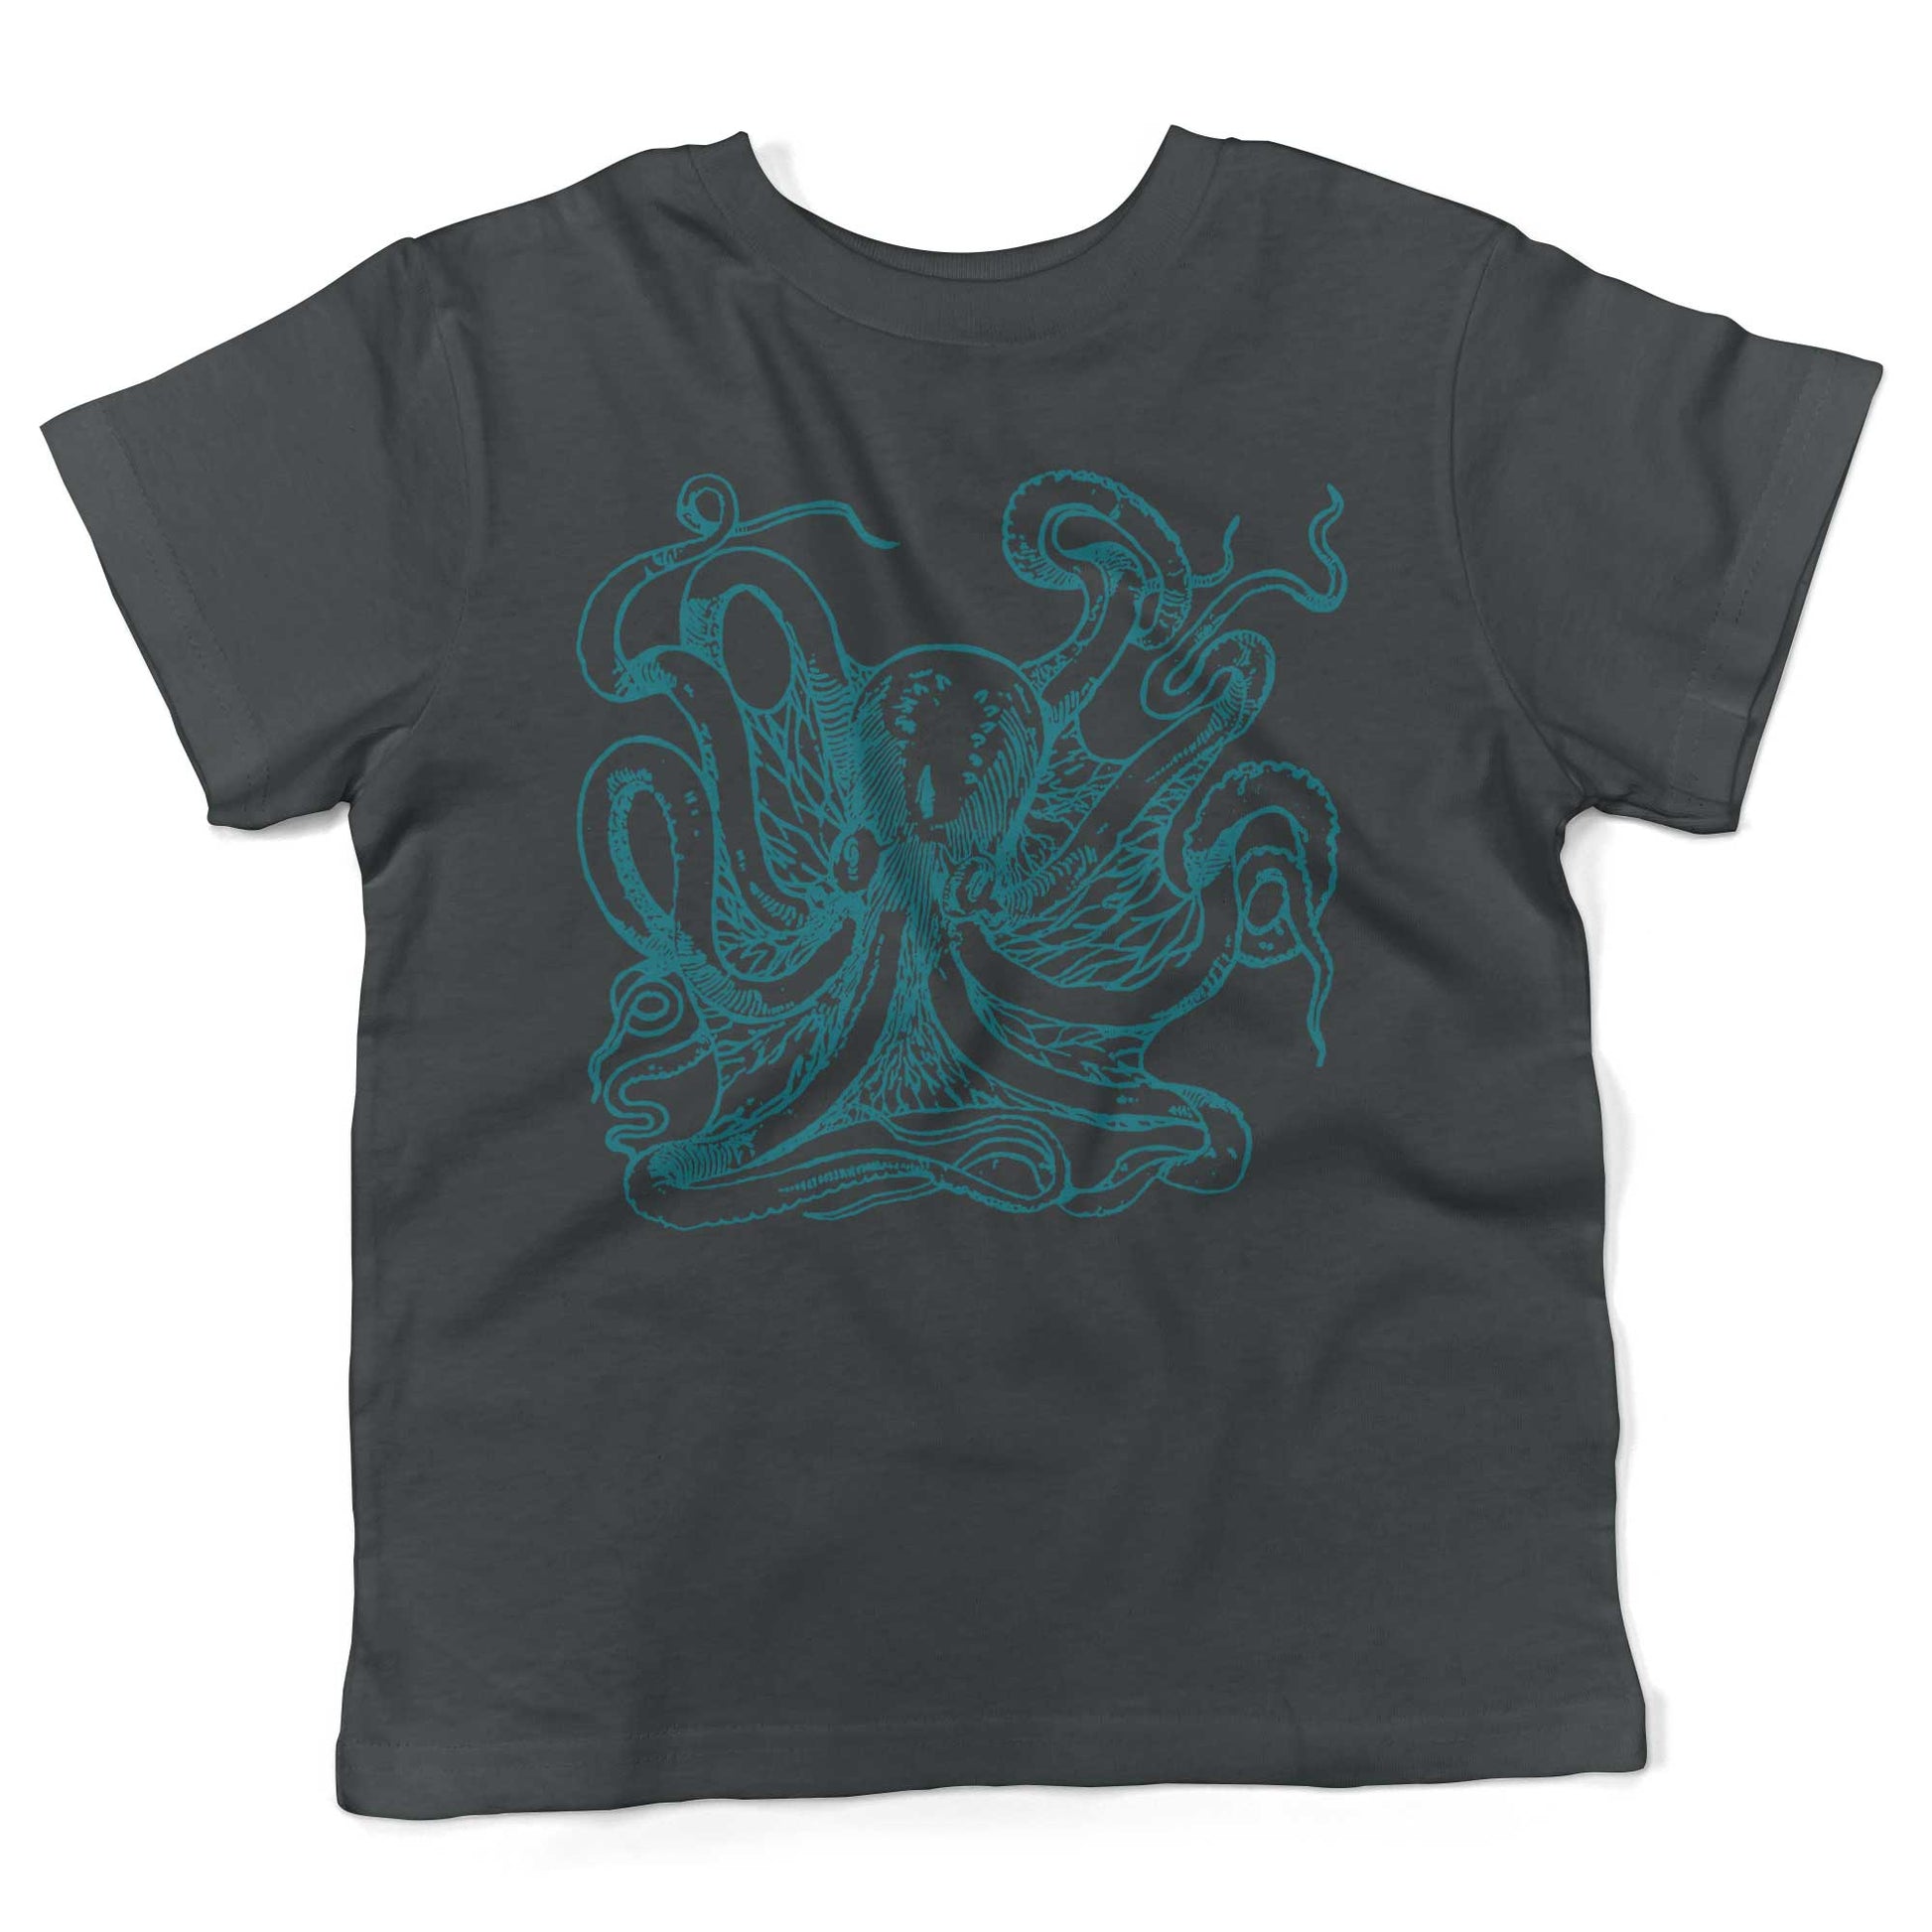 Giant Octopus Toddler Shirt-Asphalt-2T